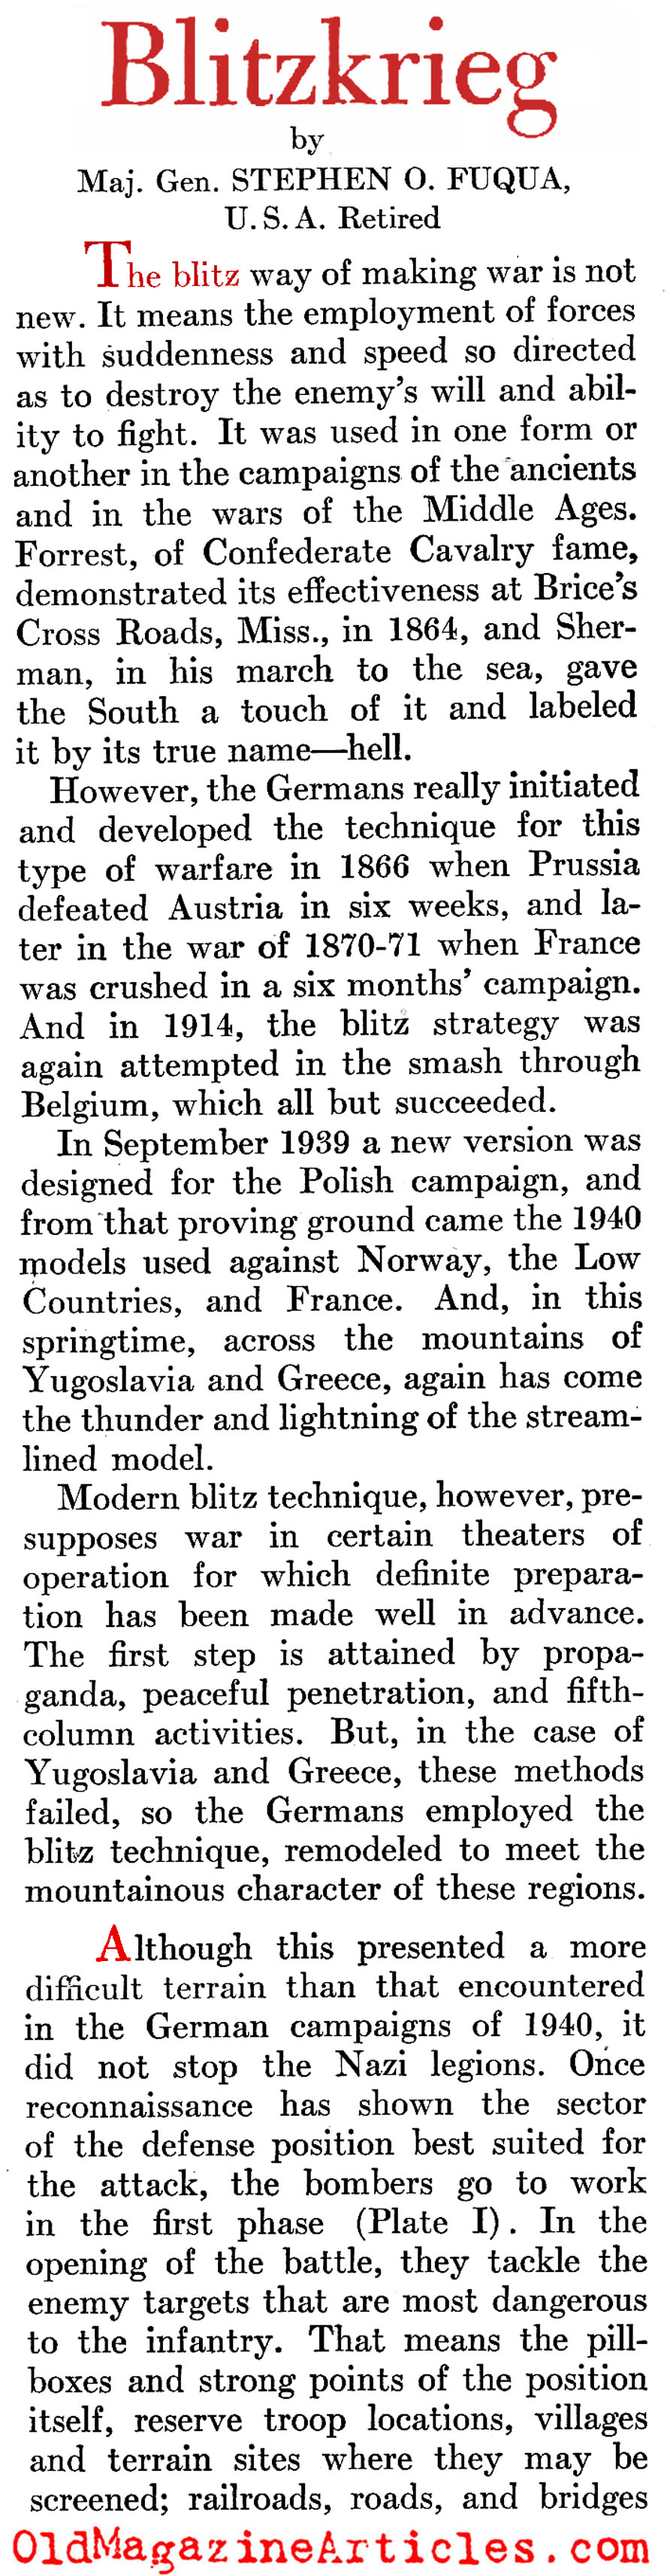 Blitzkrieg (Newsweek Magazine, 1941)